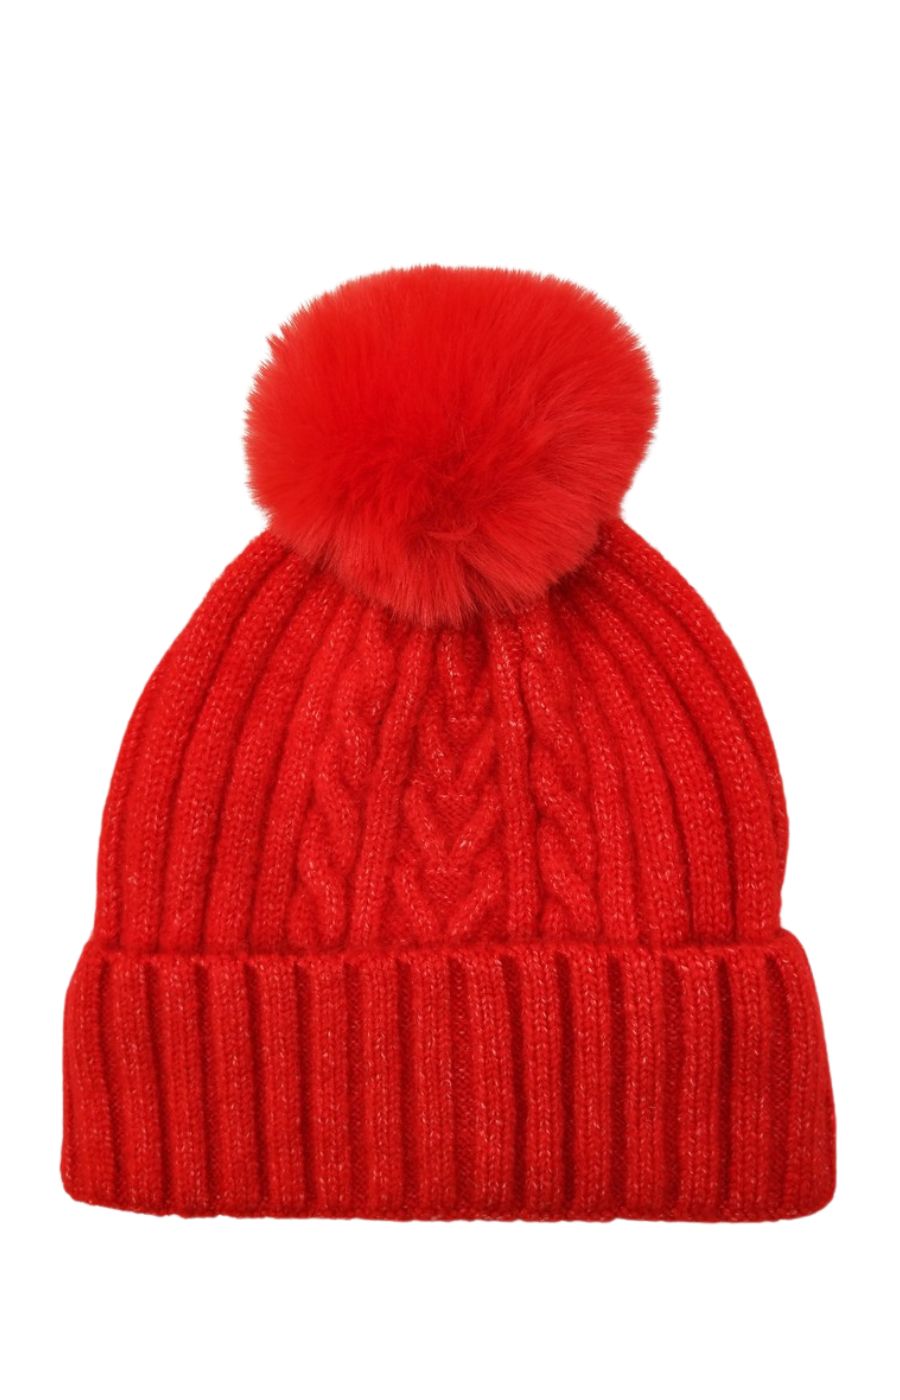 PomPom Hat in Red